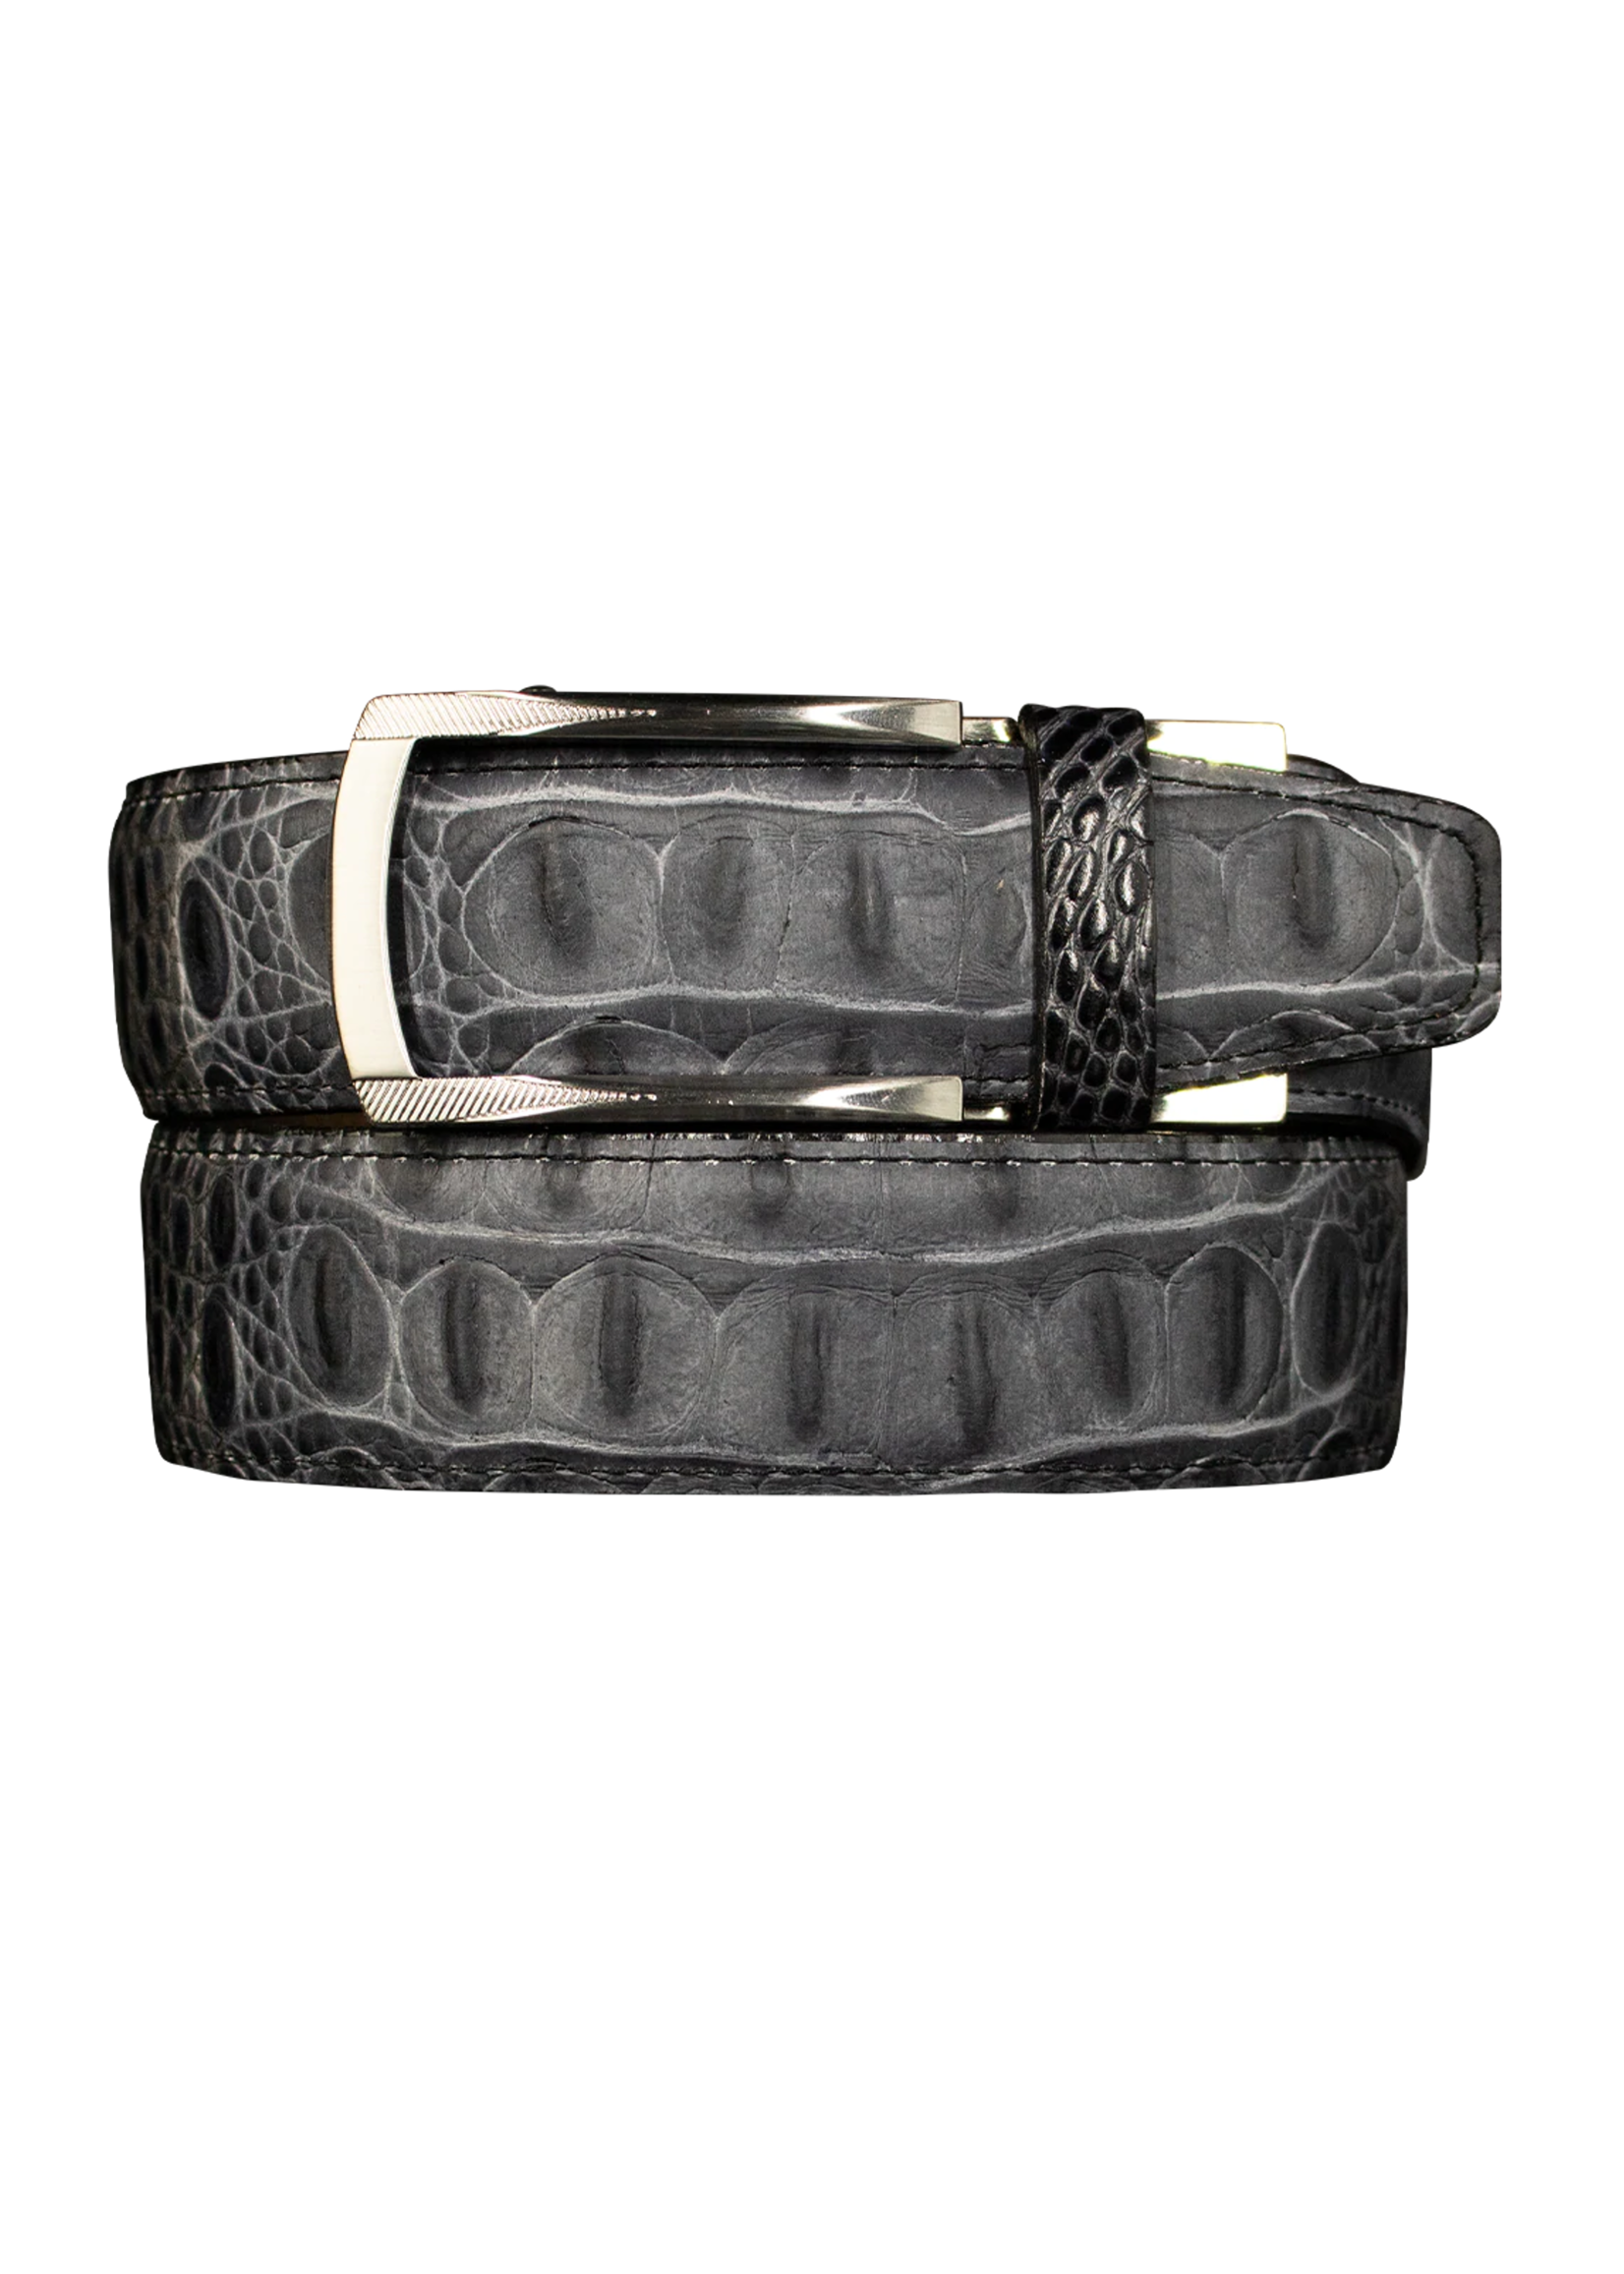 NEXBELT Chordata Crocodile Print Embossed Leather Belt